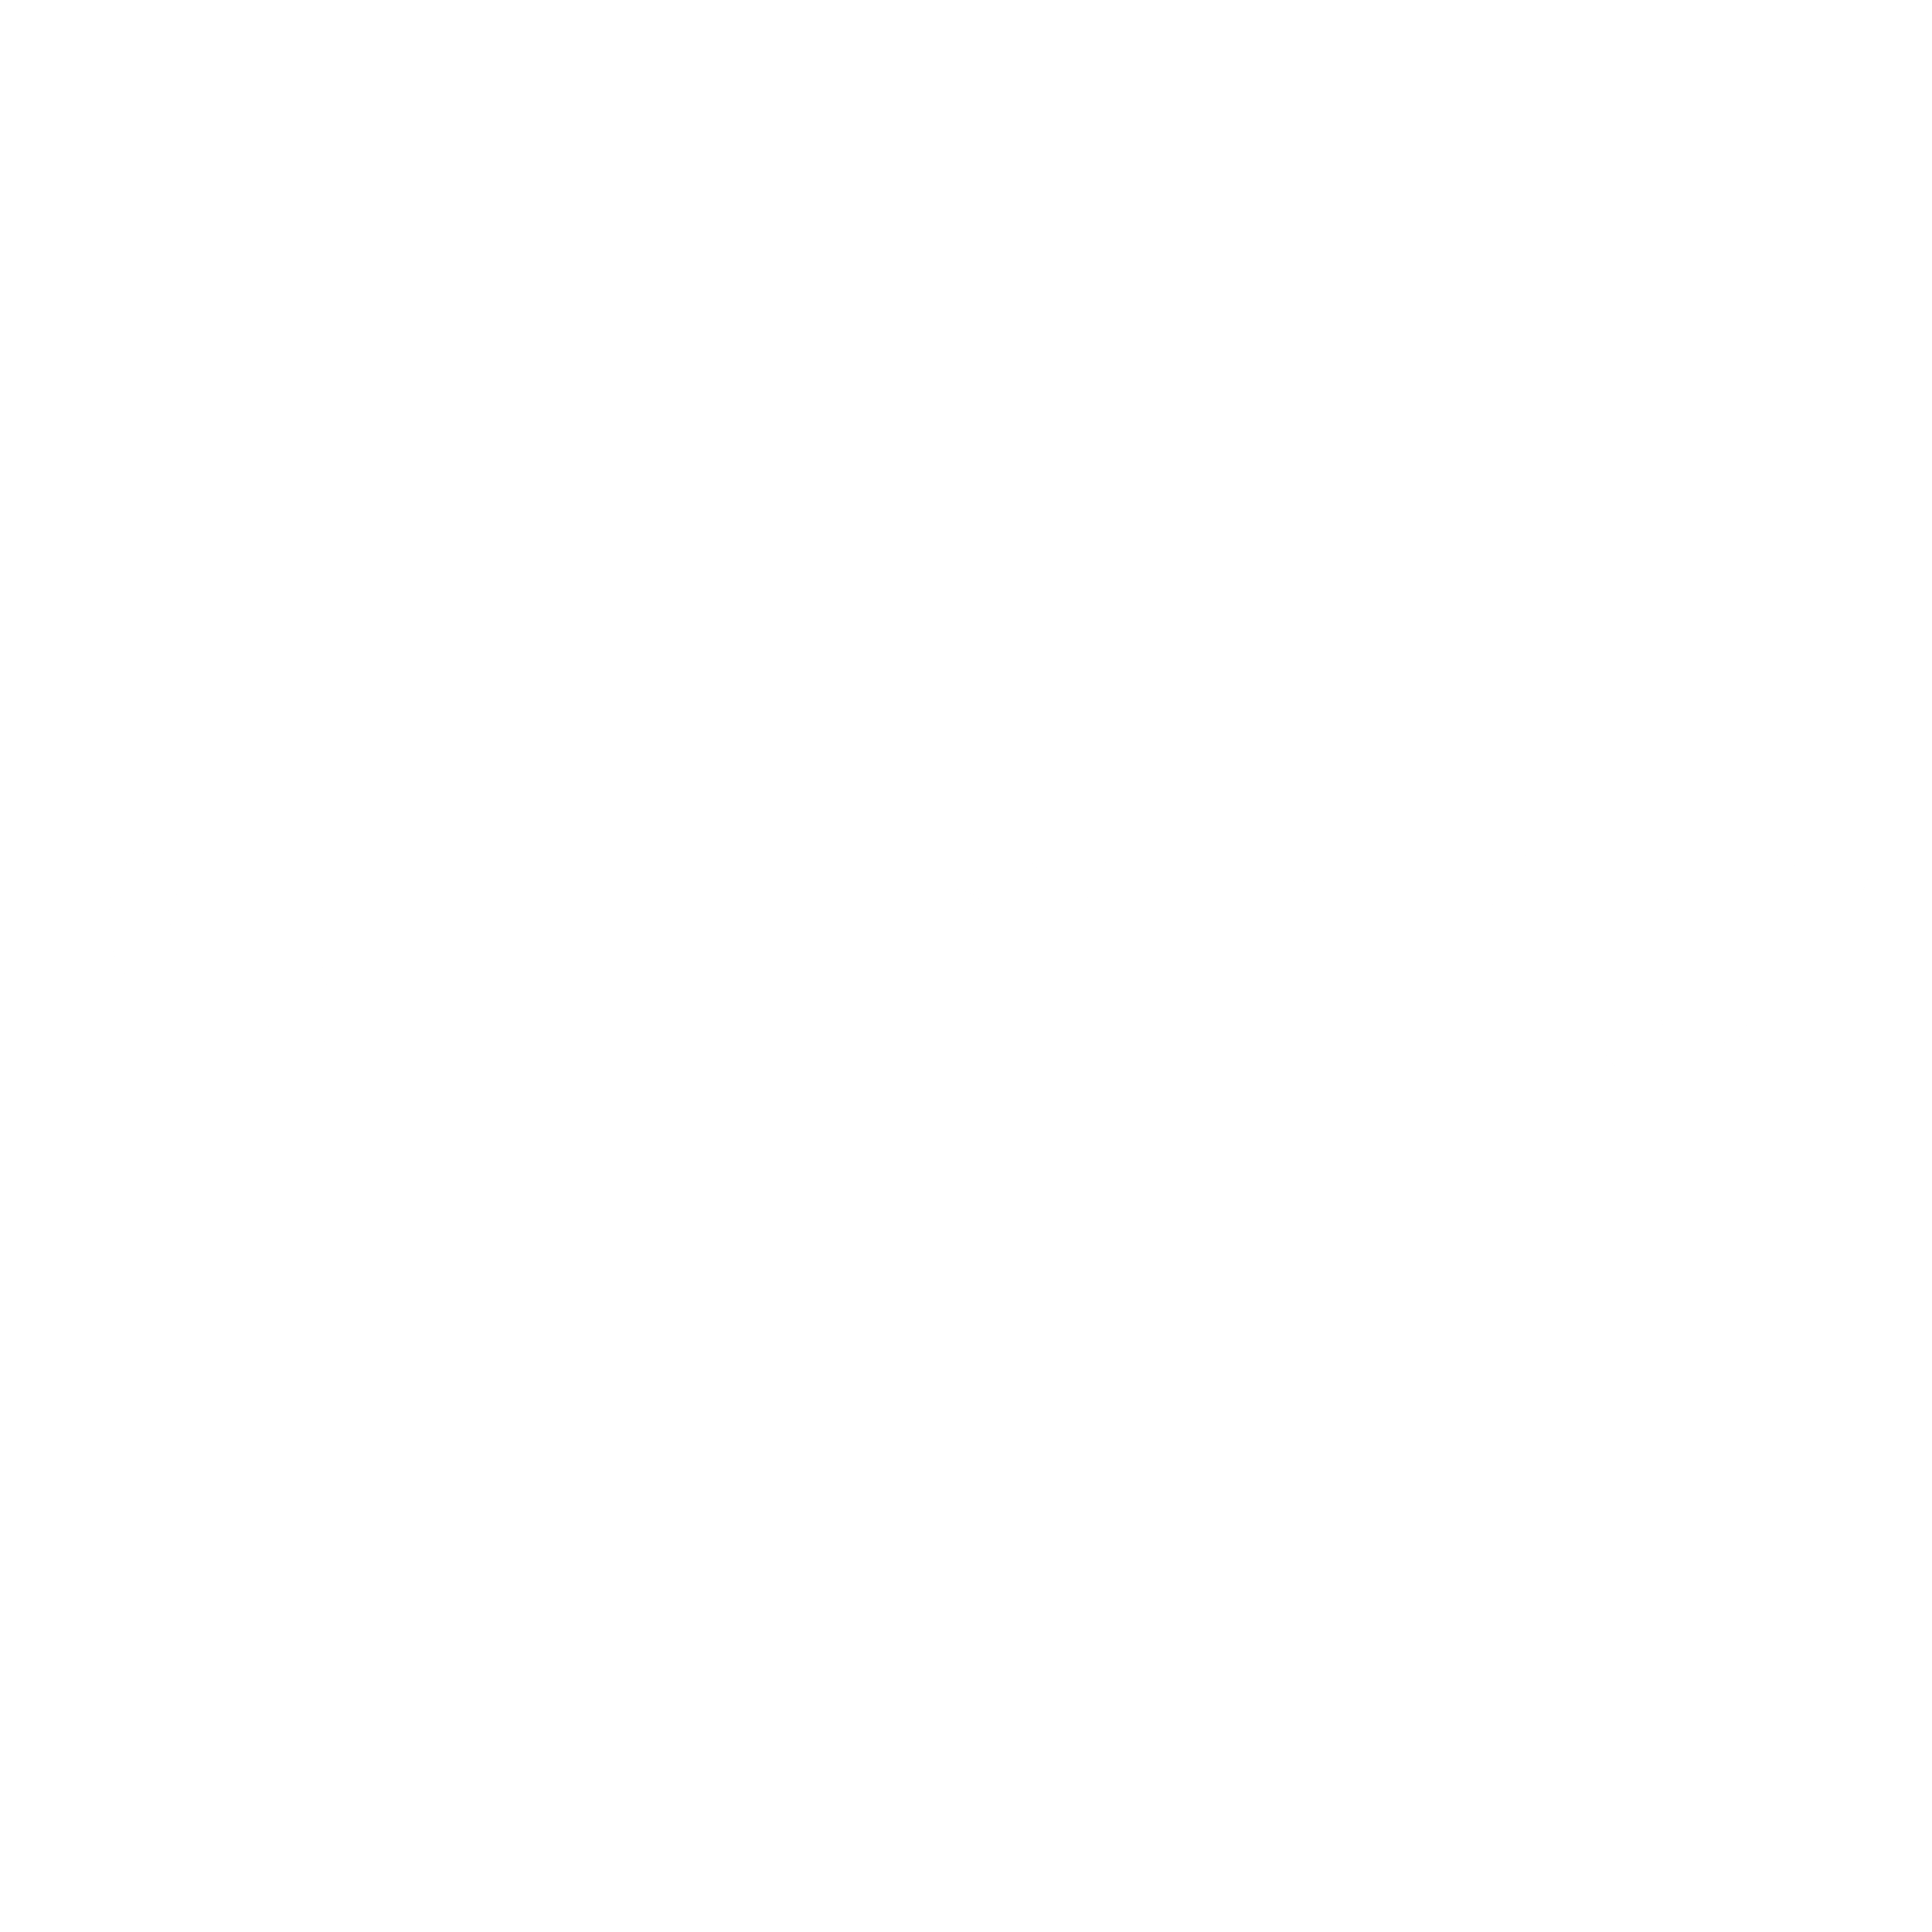 shimano logo white.png